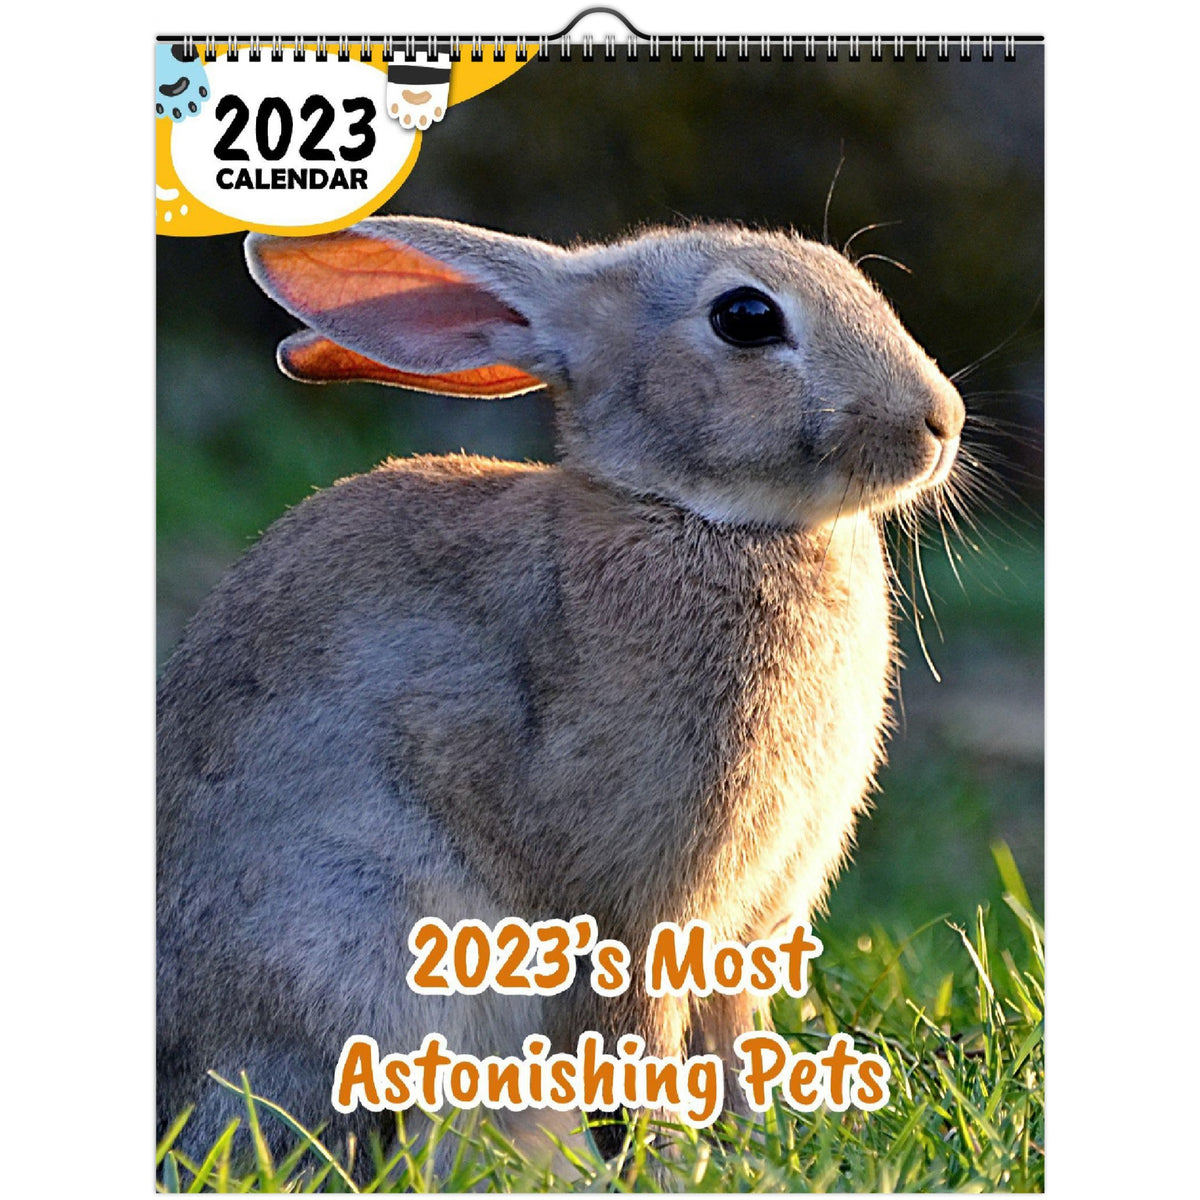 2023's Most Astonishing Pets 2023 Wall Calendar The Blissful Birder